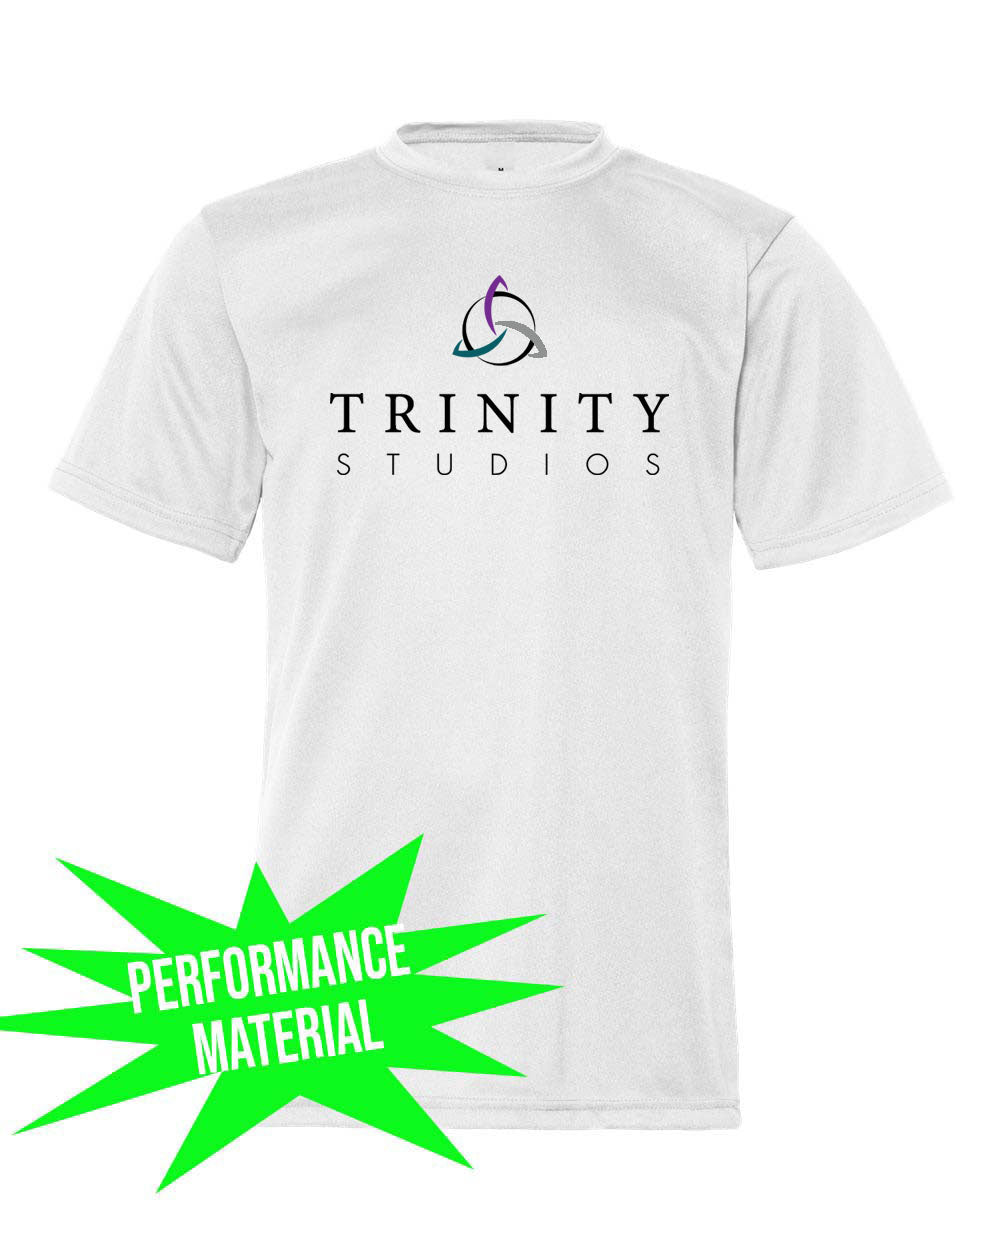 Trinity Studios Design 6 Performance material T-Shirt